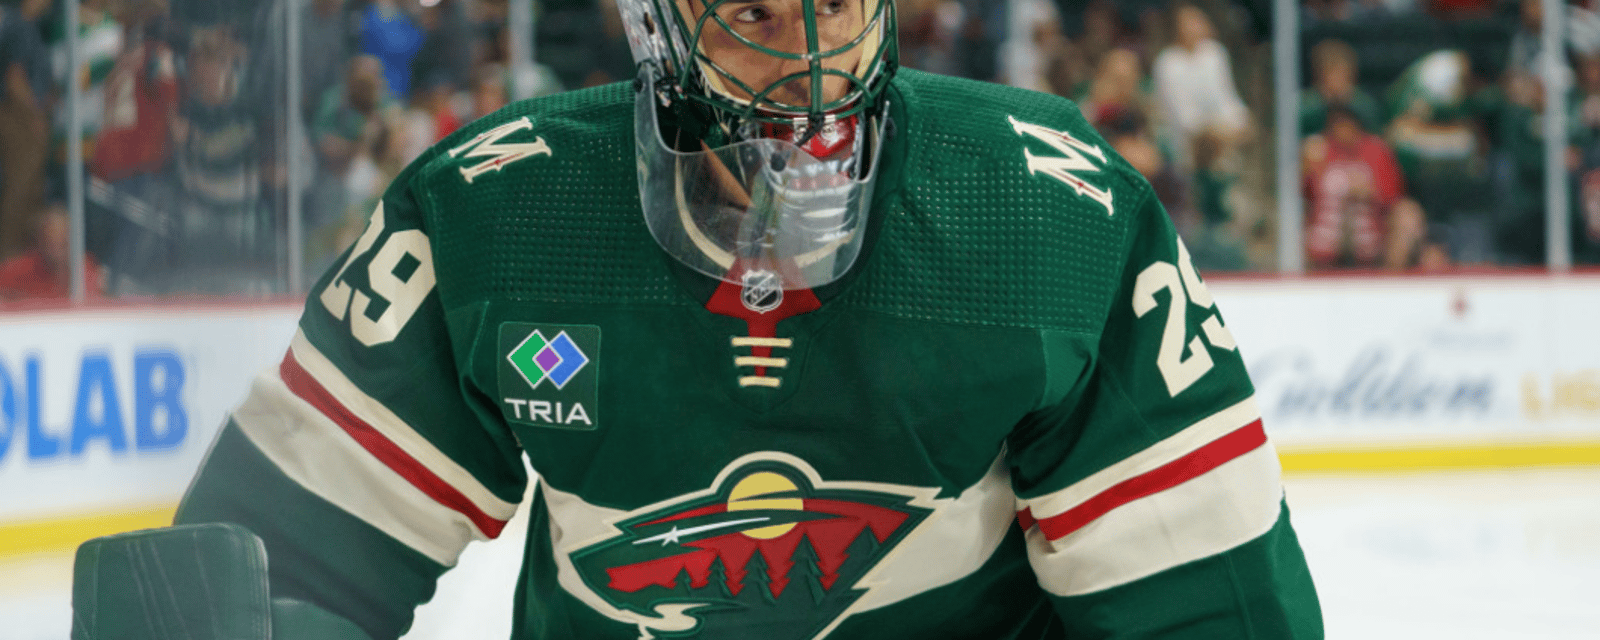 Report: NHL threatens Marc-Andre Fleury, Wild organization 